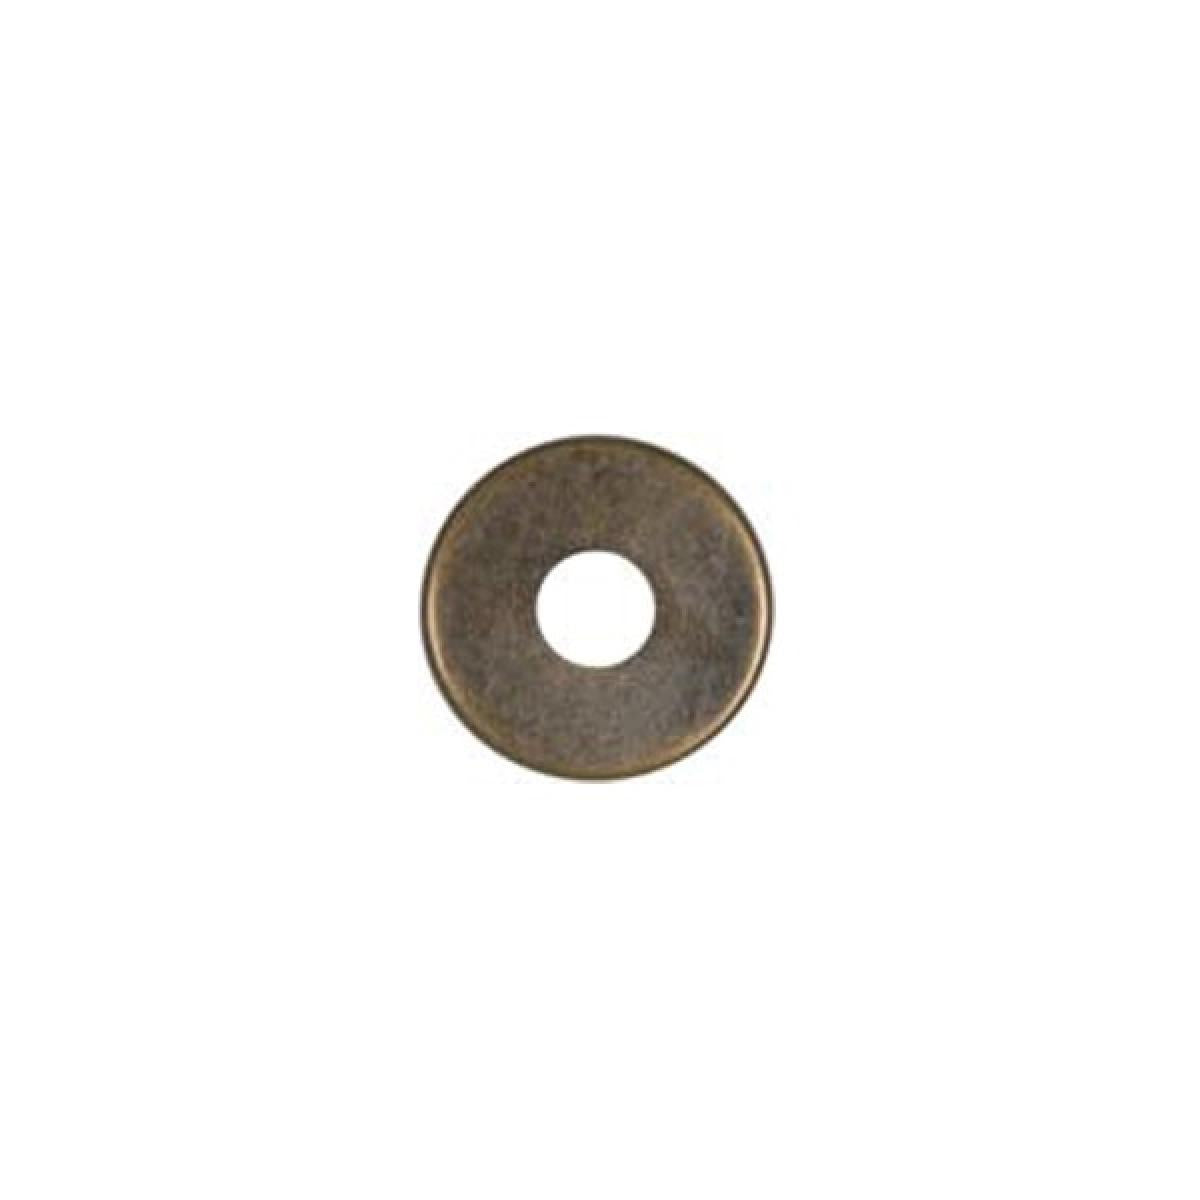 Satco 90-1788 Steel Check Ring Curled Edge 1/8 IP Slip Antique Brass Finish 5/8" Diameter